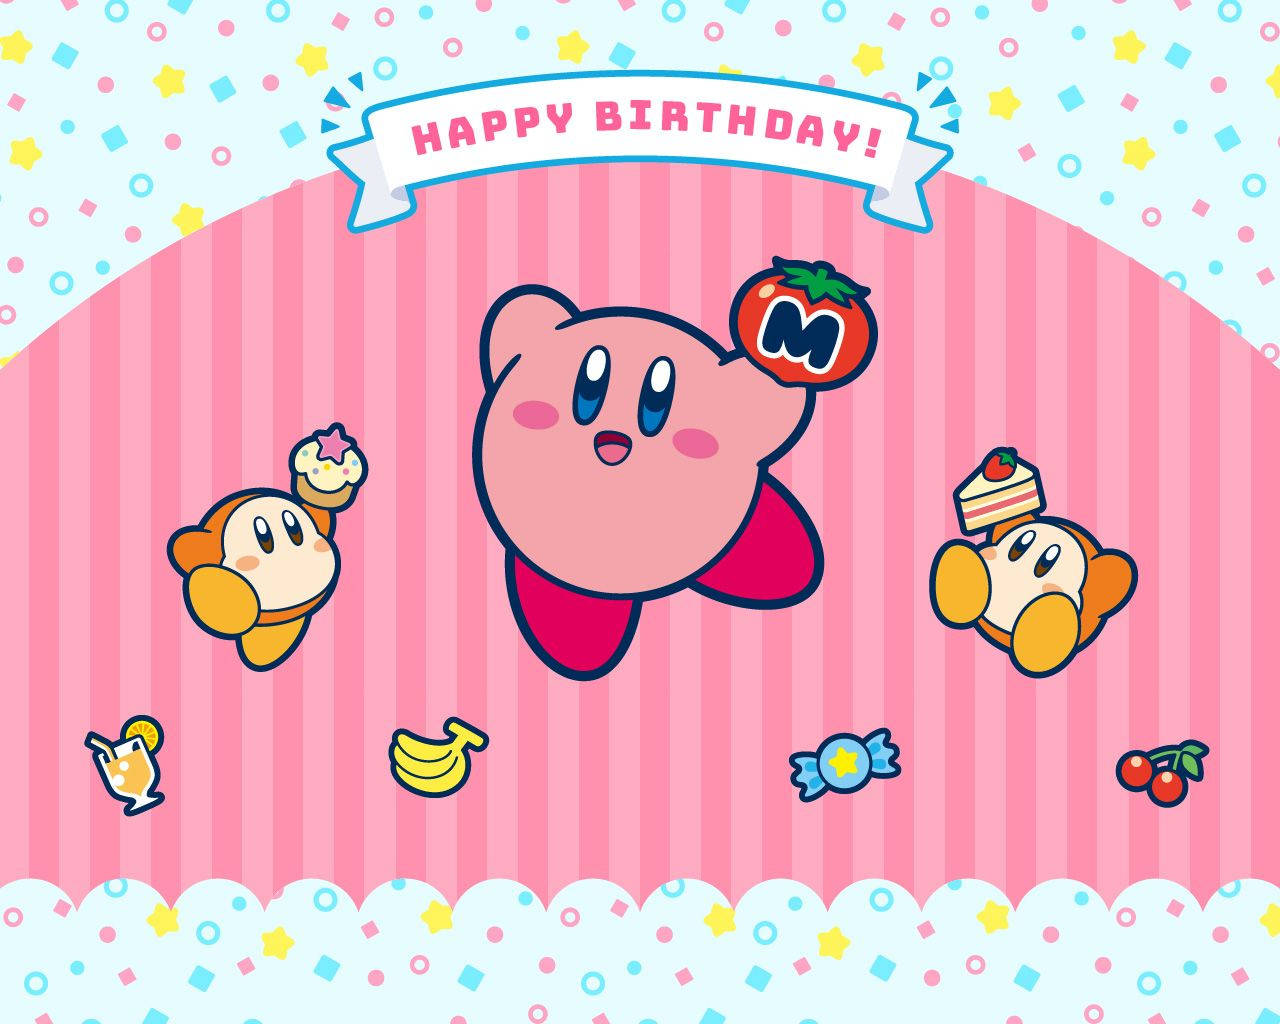 Cute HD birthday wallpaper with Kirby theme design